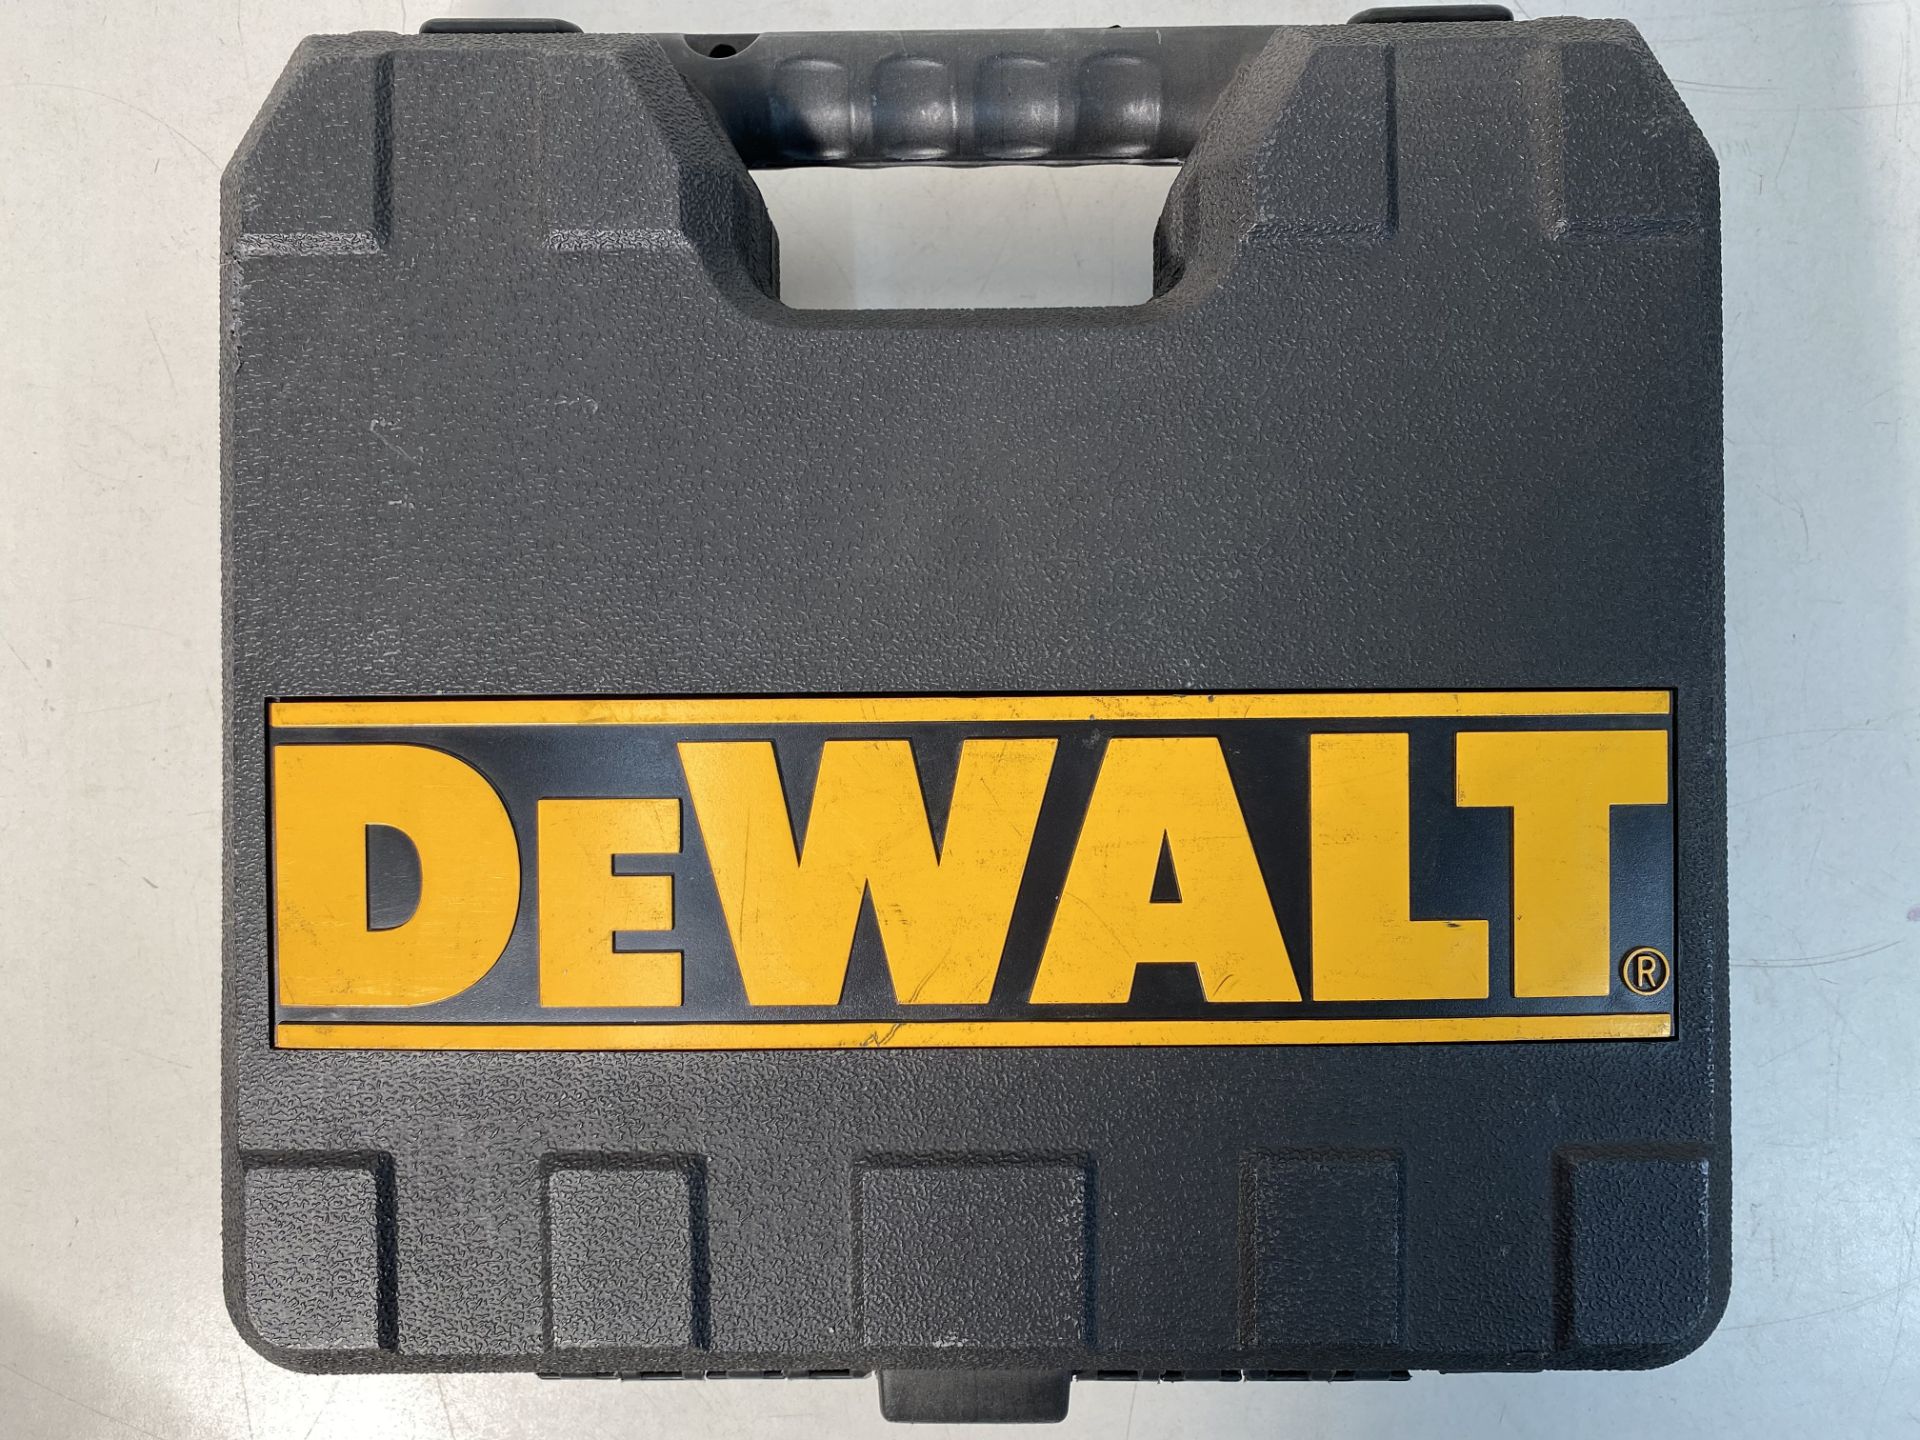 DeWalt DCD710C2 10.8V Drill Driver Set